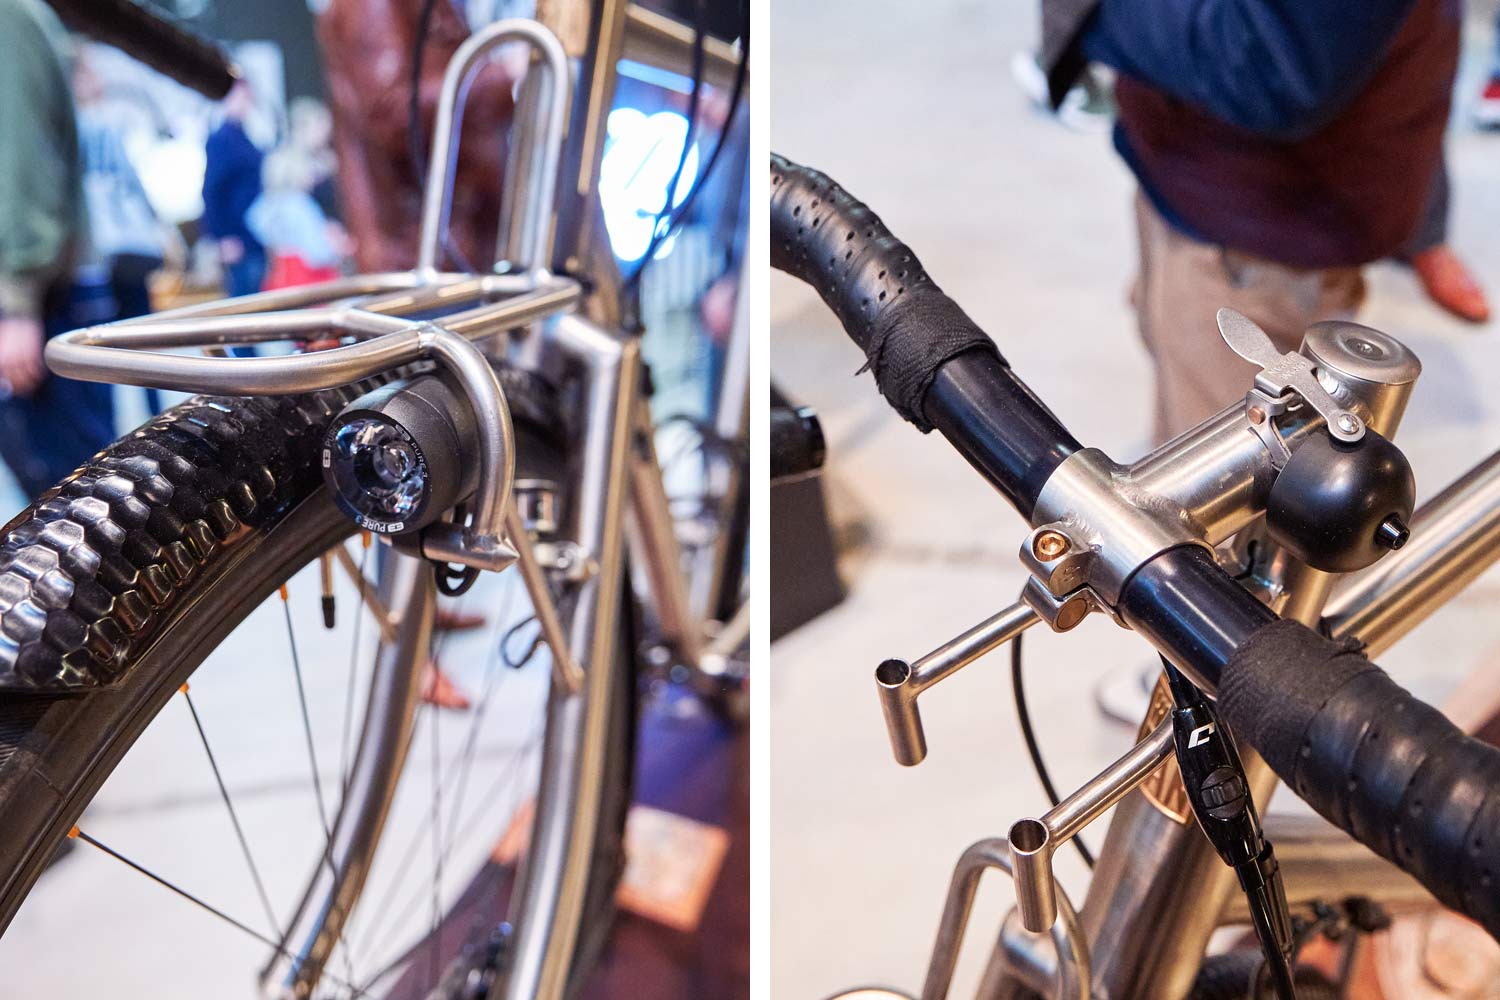 Wheel Dan ti randonneur bike_Kolektif Berlin, custom titanium superlight rando bike, photo@hagbardcel